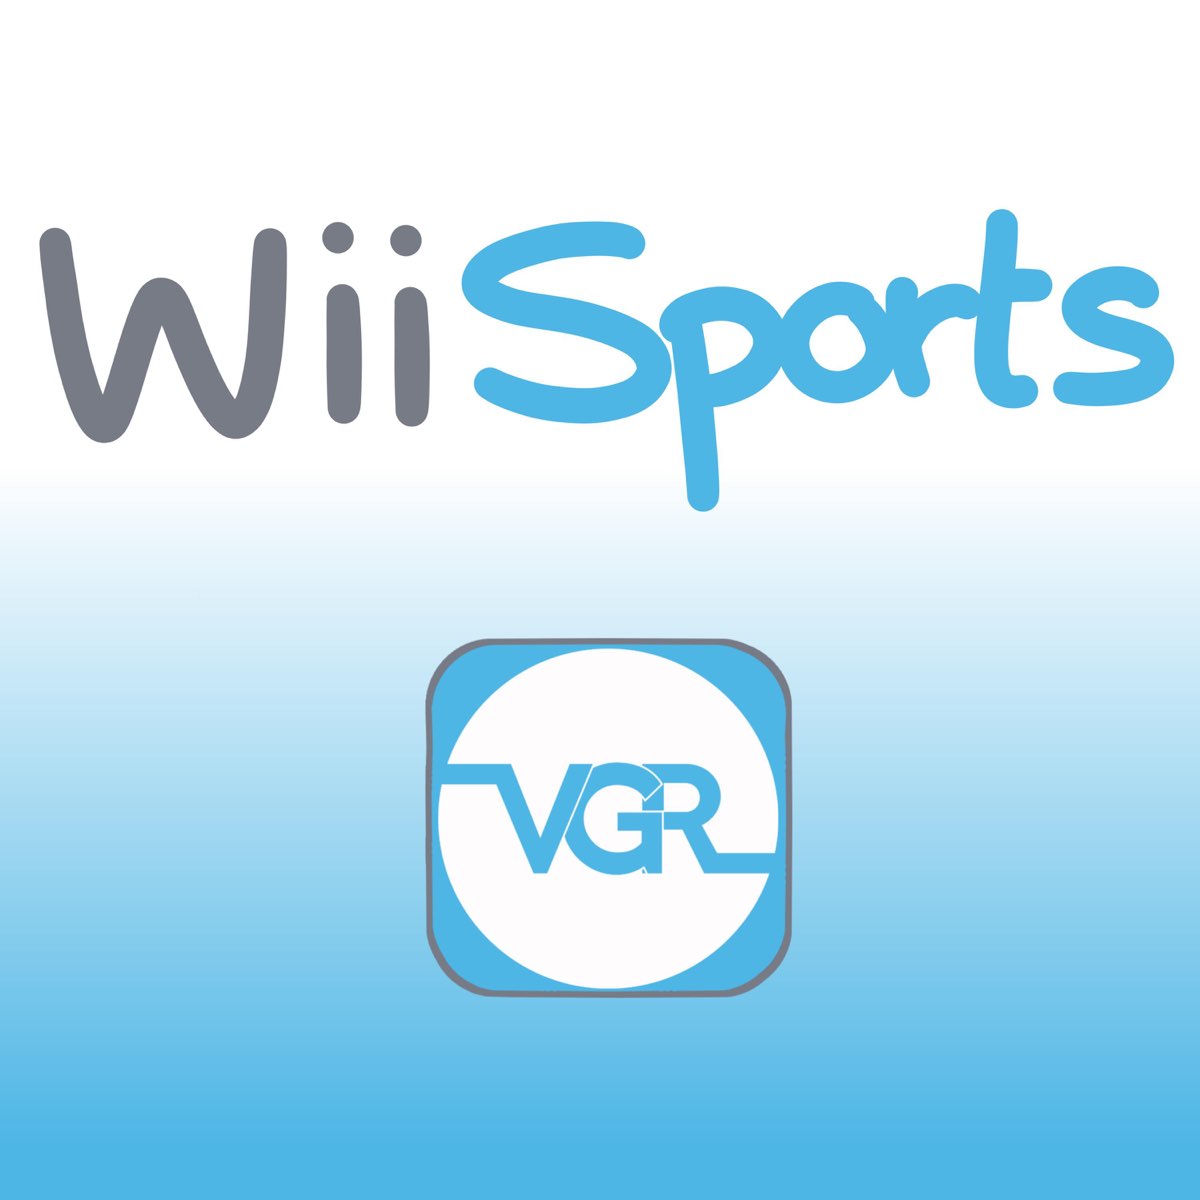 Wii Sports - Single - Album by VGR - Apple Music